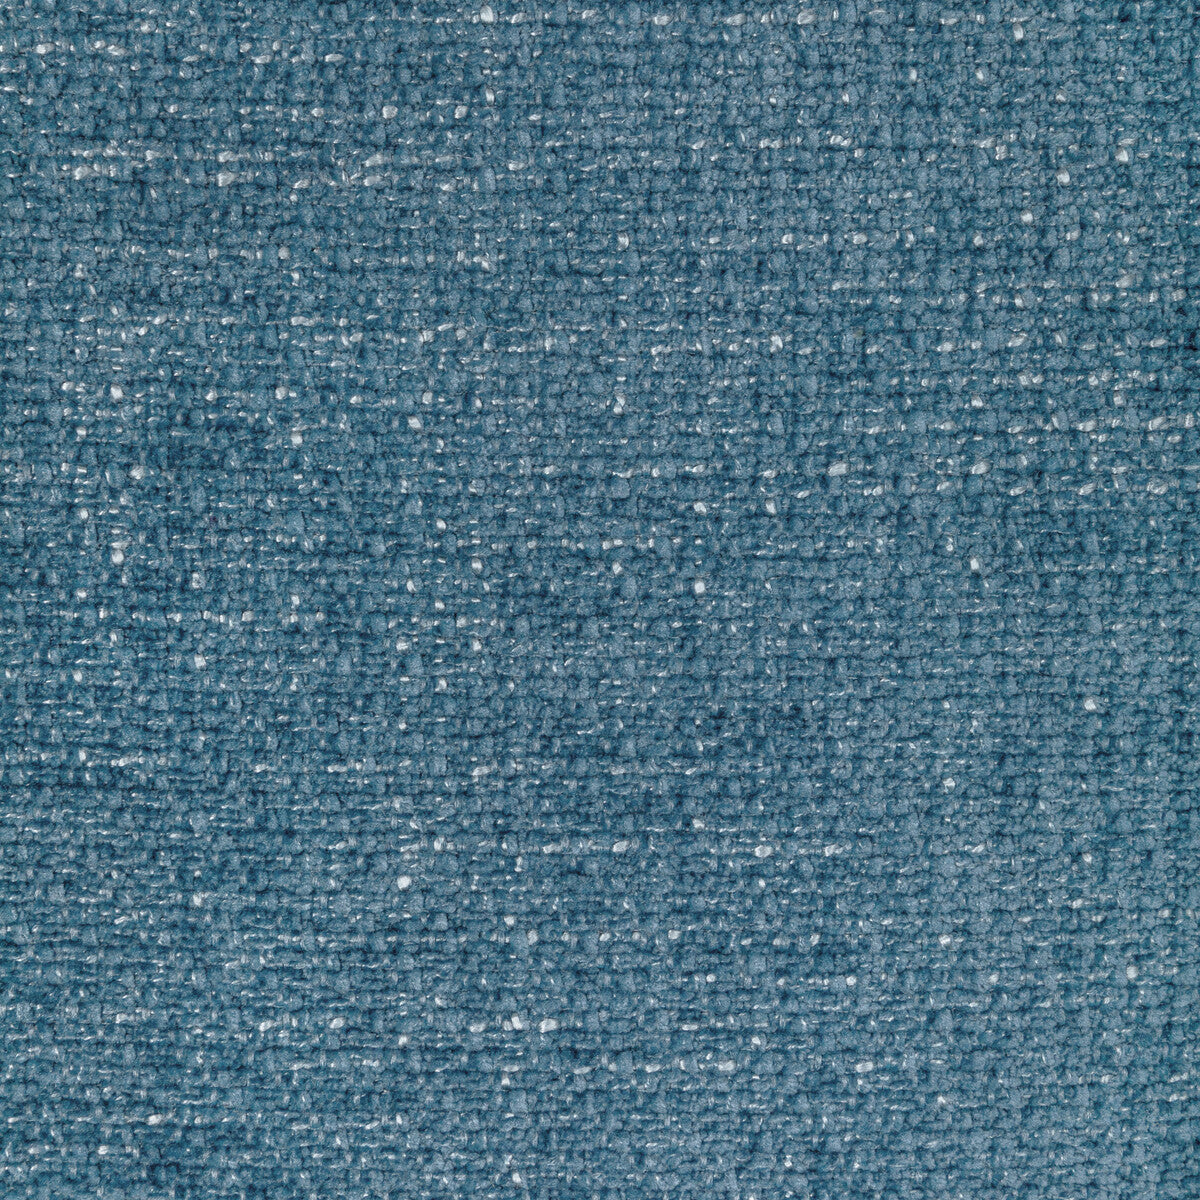 Kravet Smart fabric in 36578-5 color - pattern 36578.5.0 - by Kravet Smart in the Performance Kravetarmor collection